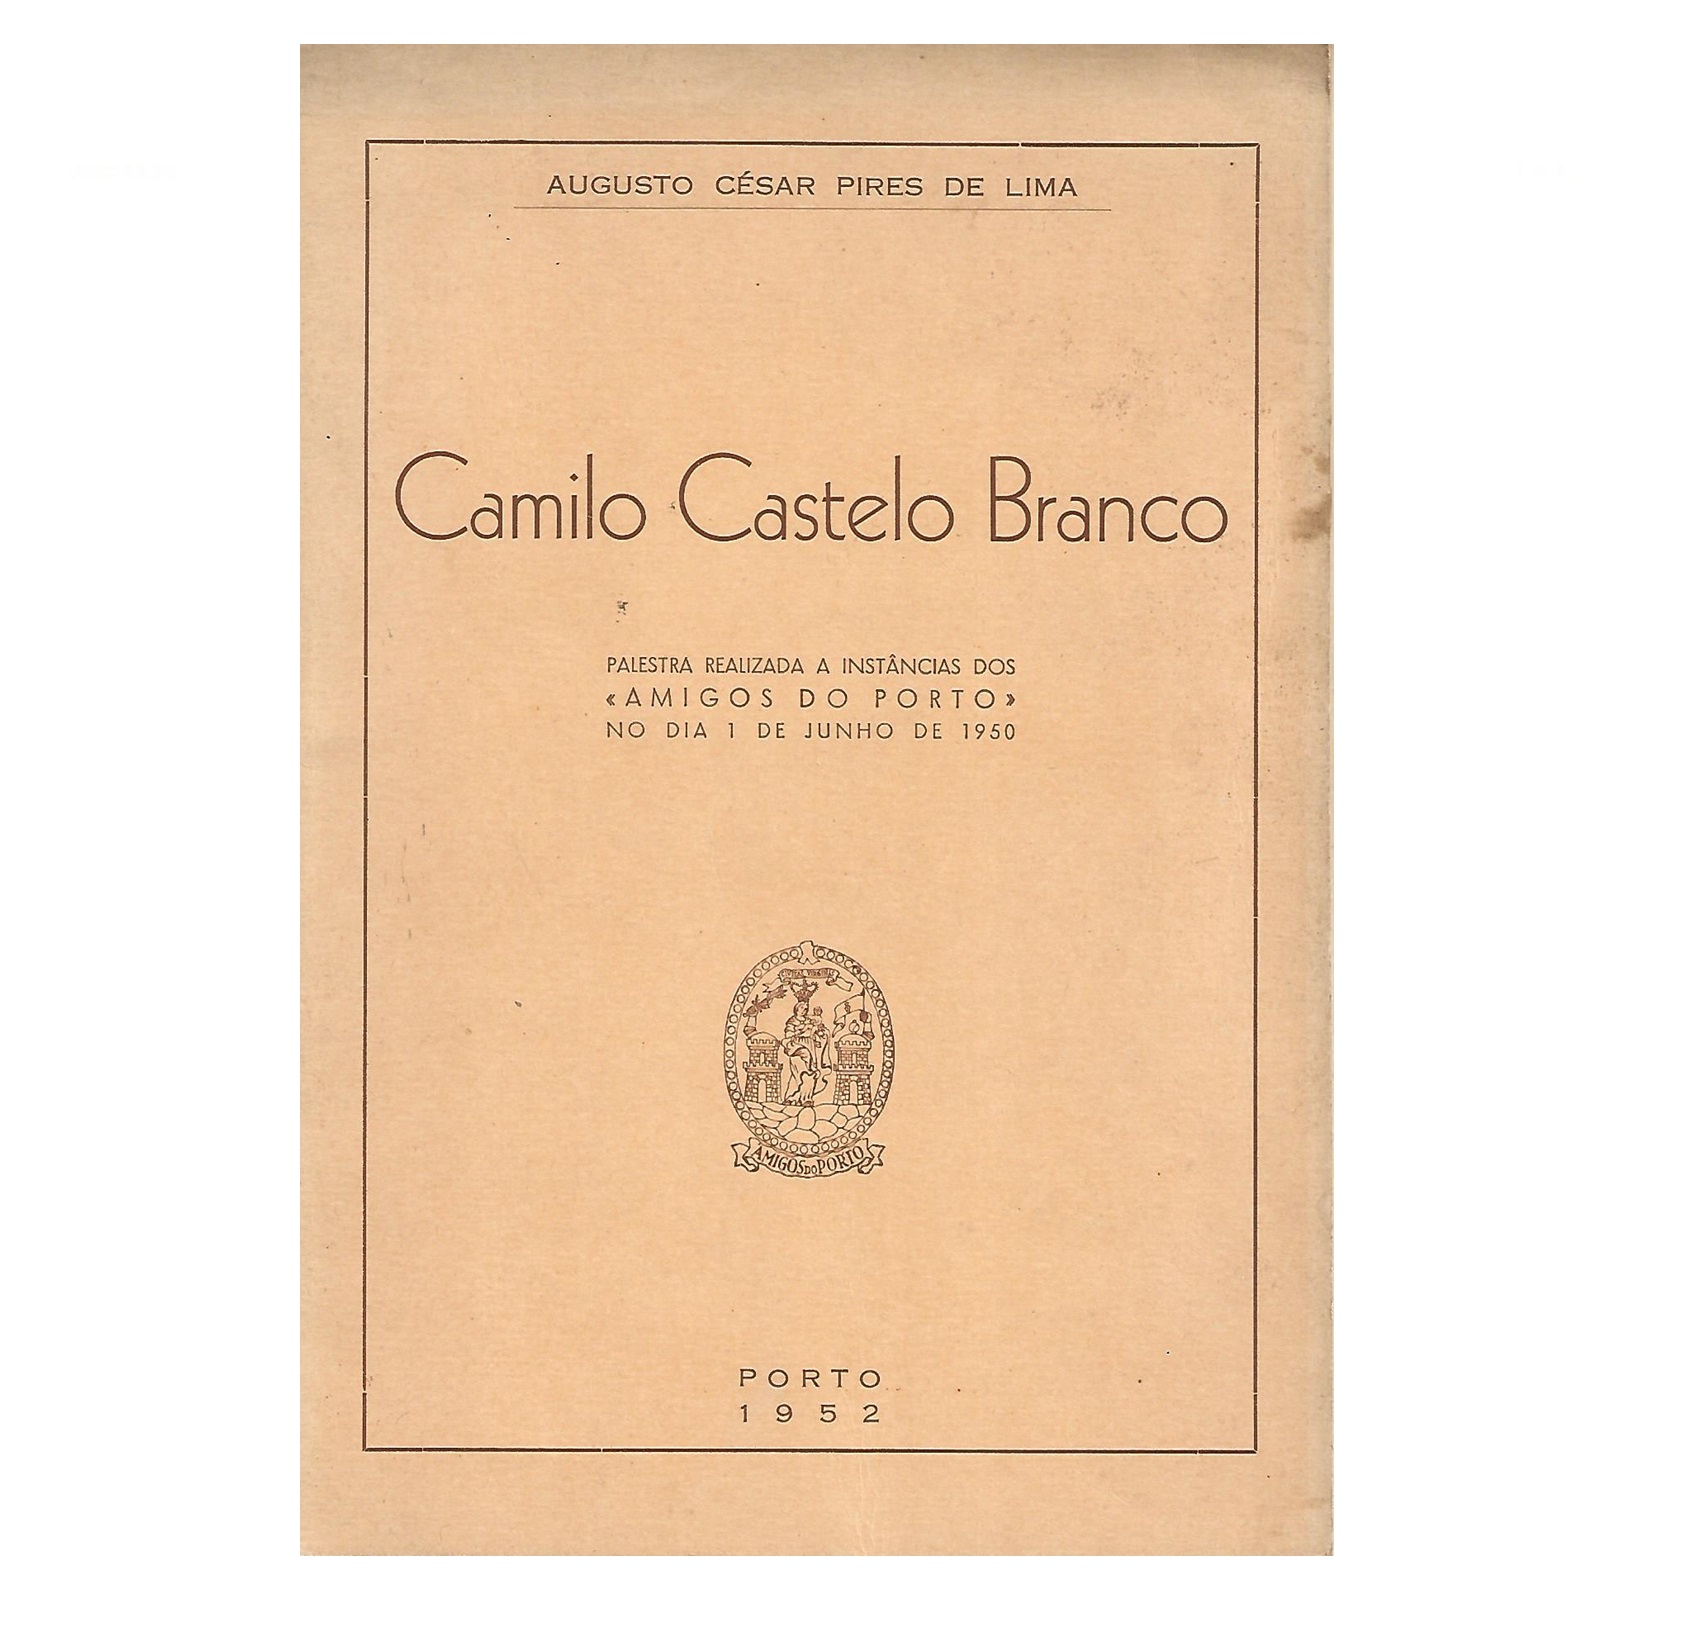  CAMILO CASTELO BRANCO